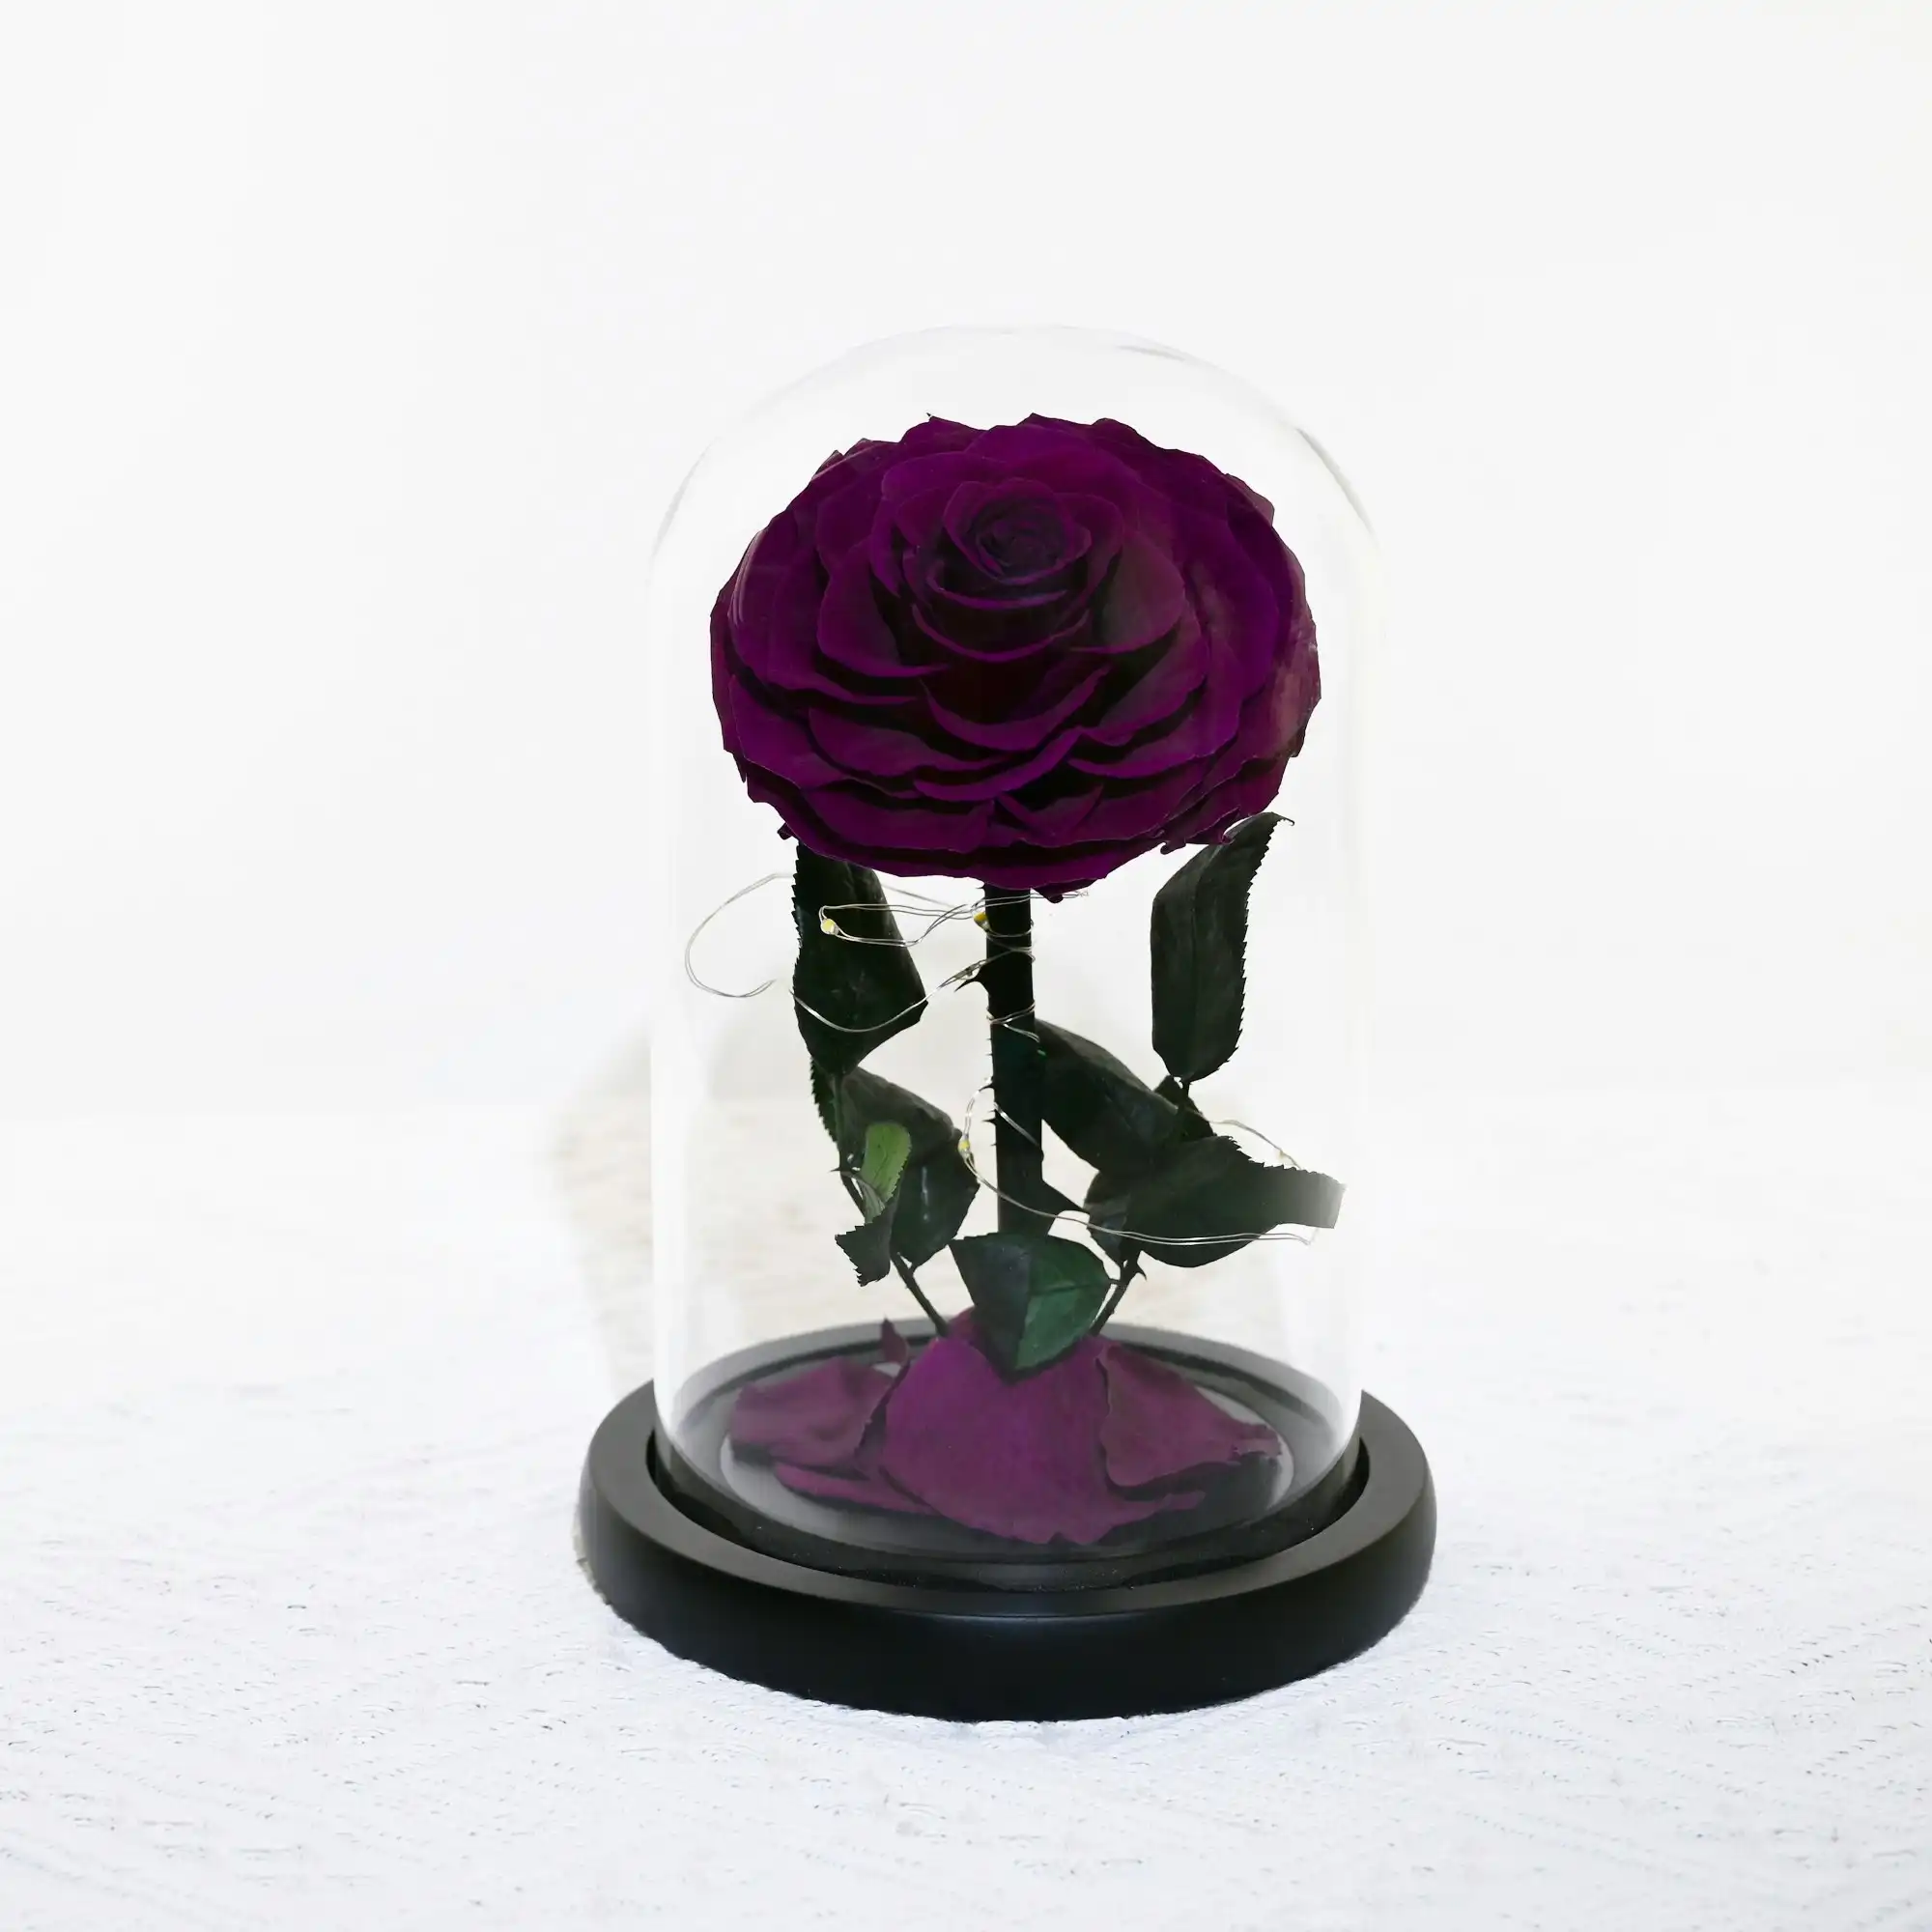 Vistara Timeless Rose - Natural 20cm Purple Preserved Rose With LED Light